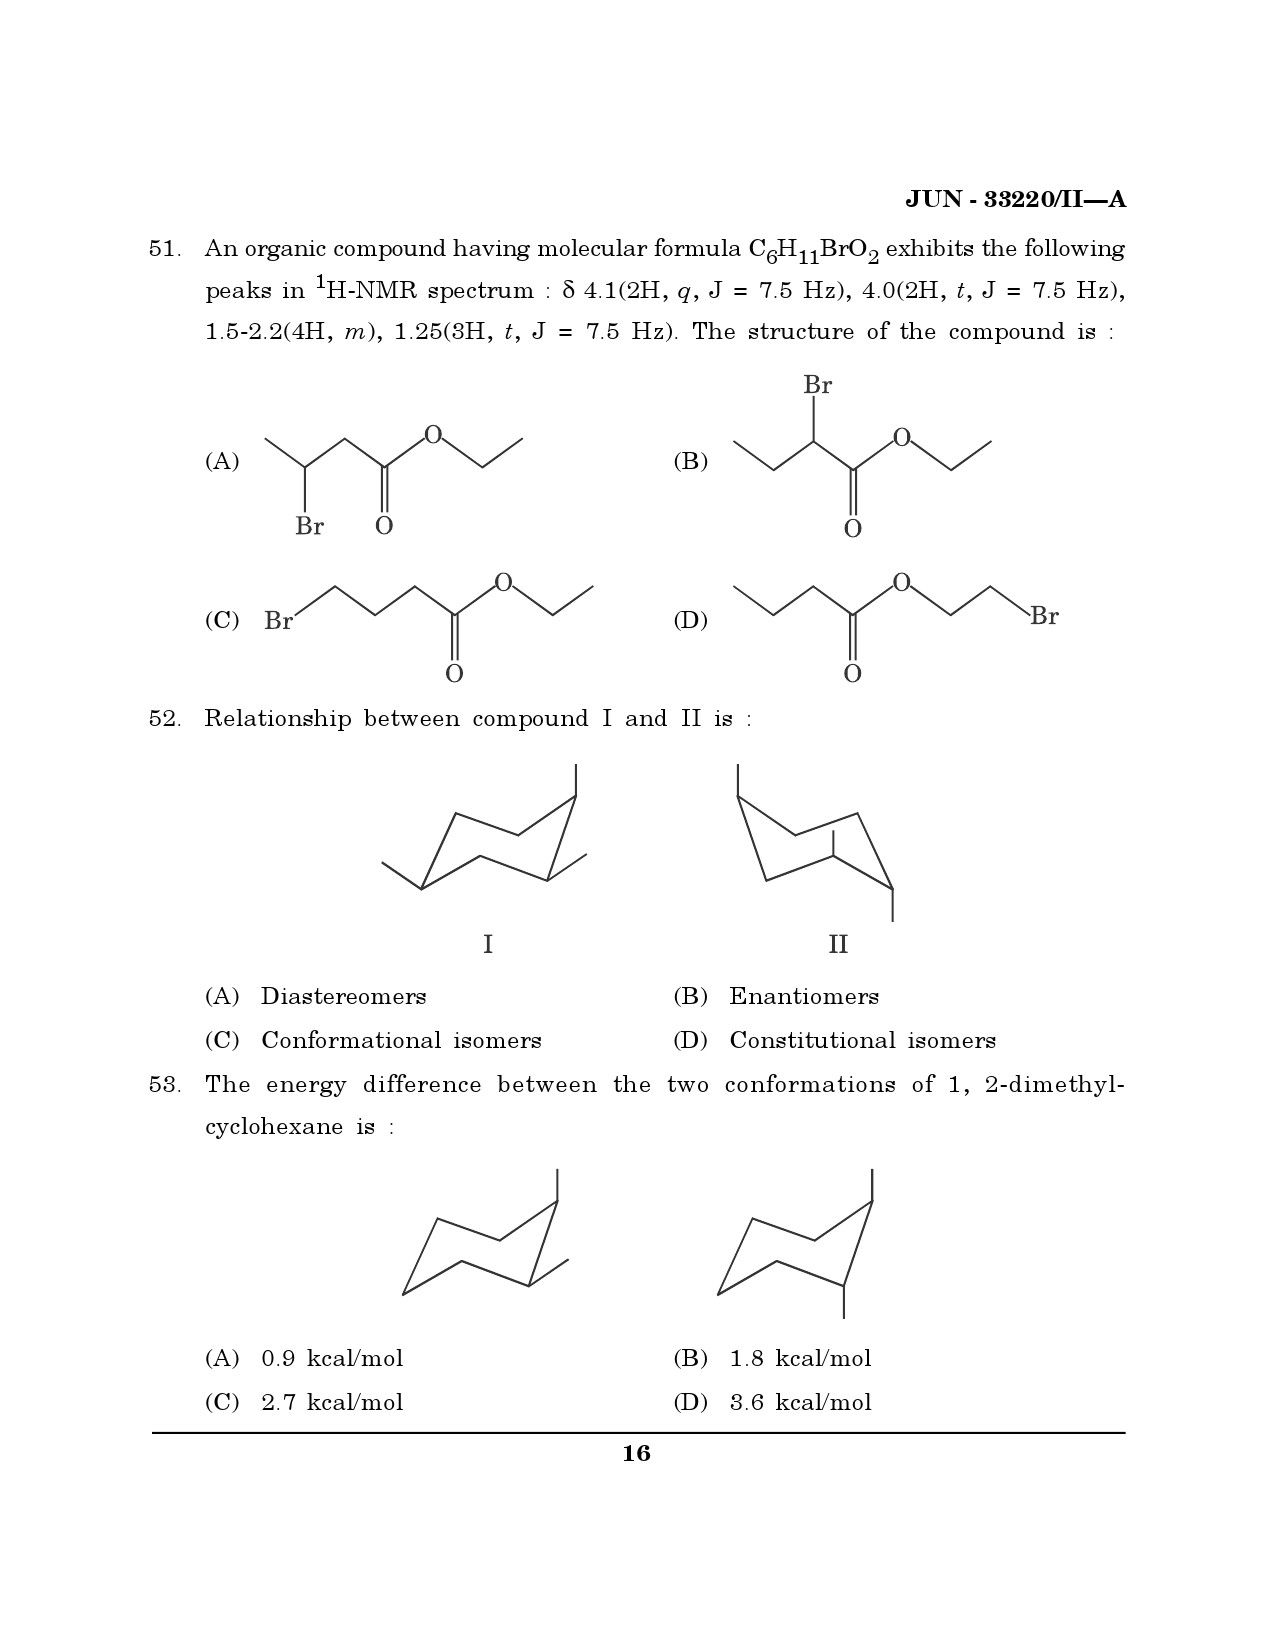 Maharashtra SET Chemical Sciences Question Paper II June 2020 15